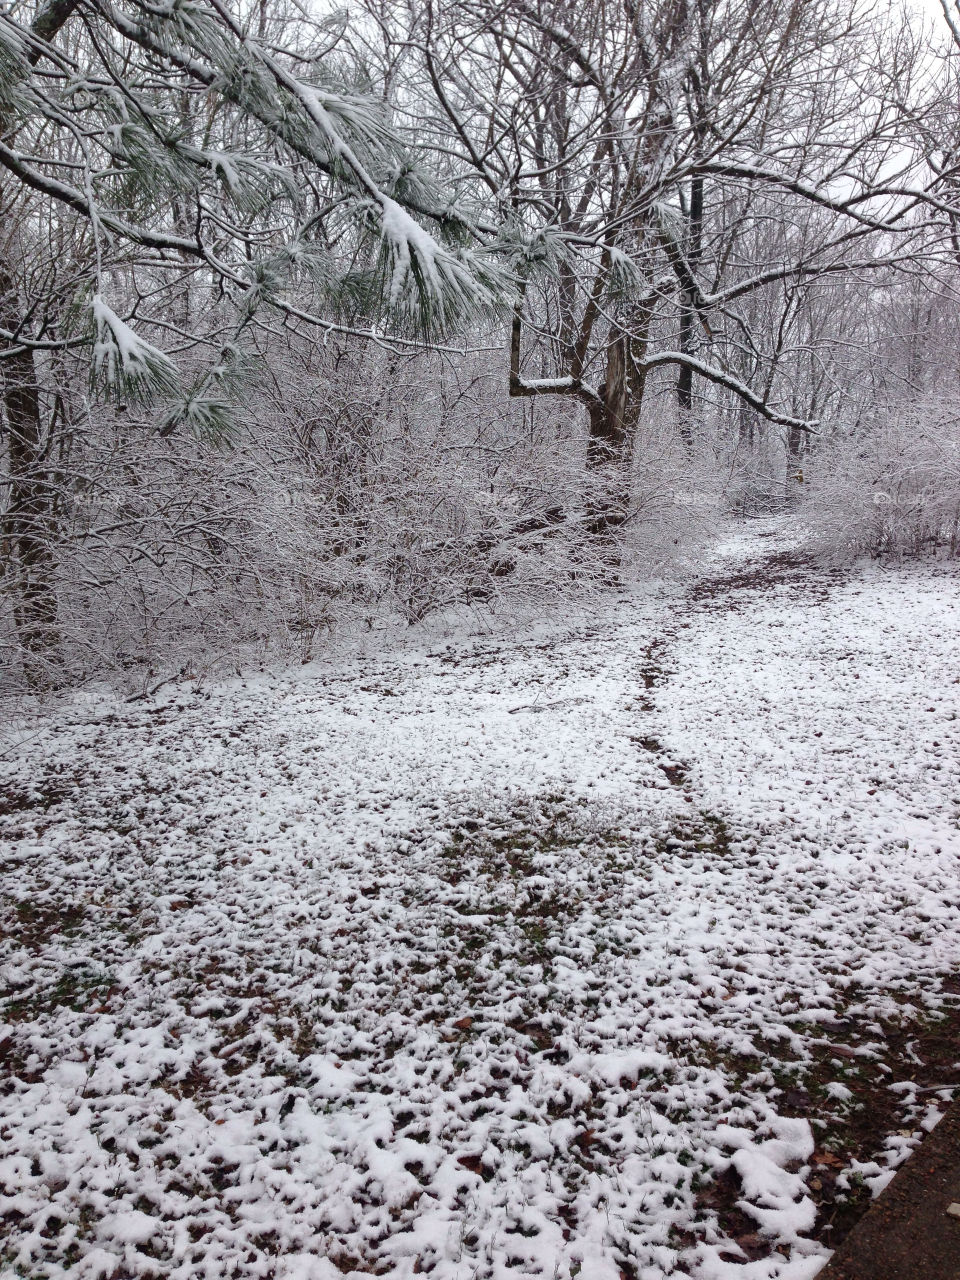 A path through snowy woods.